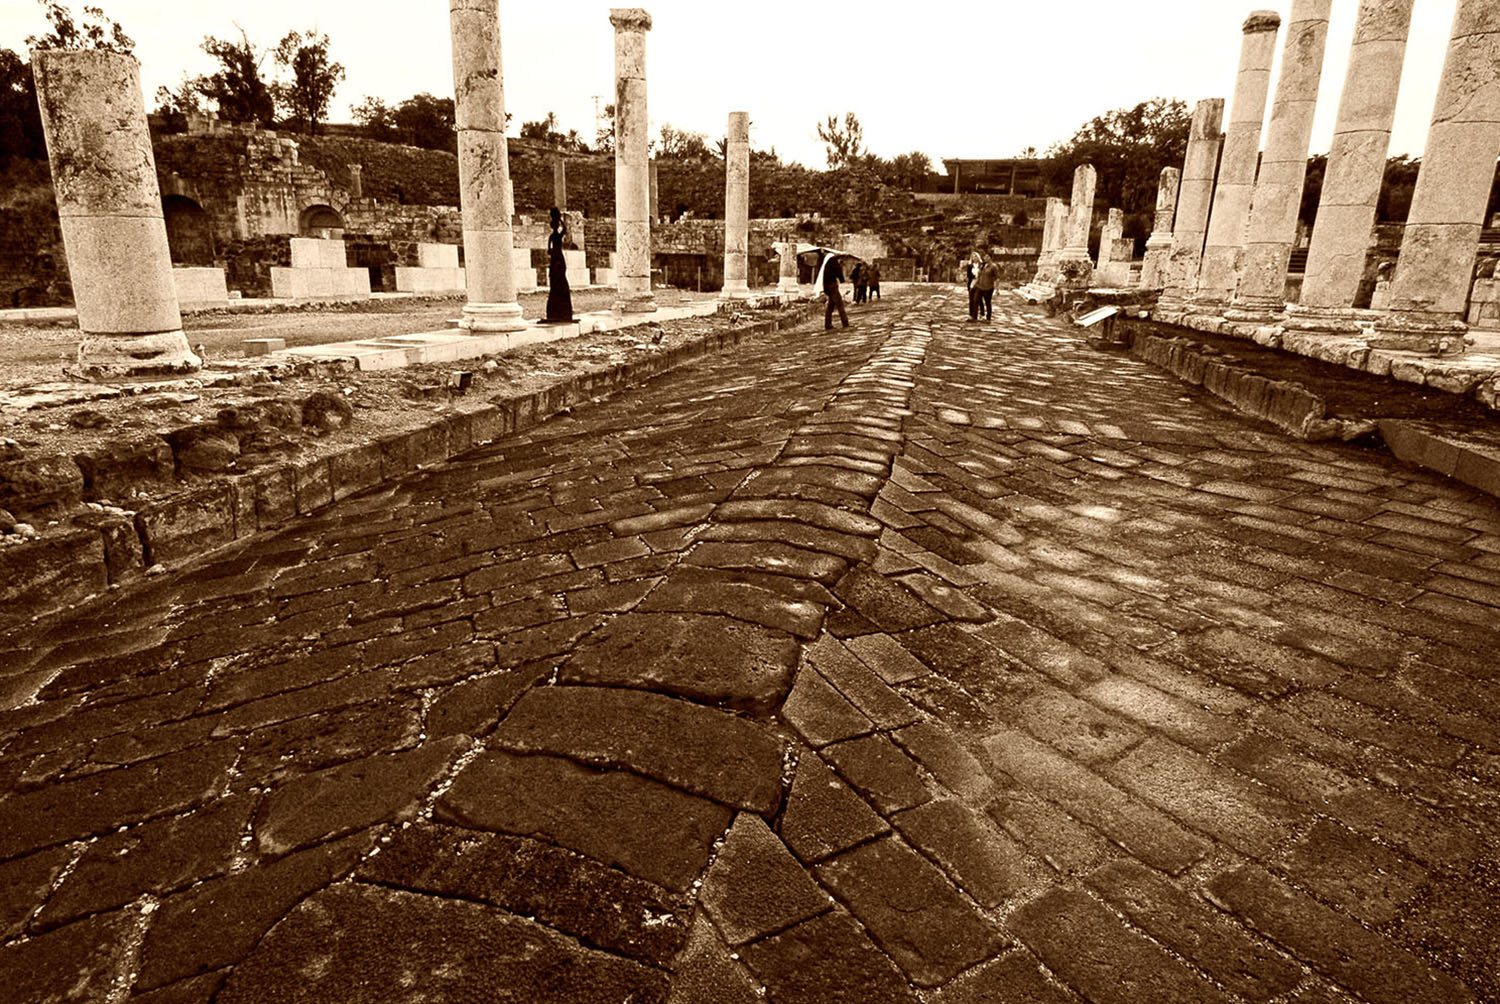 Beit_Shean_Ancient_Roman_Ruins_Pillars_Stonework_Israel_Sepia.jpg